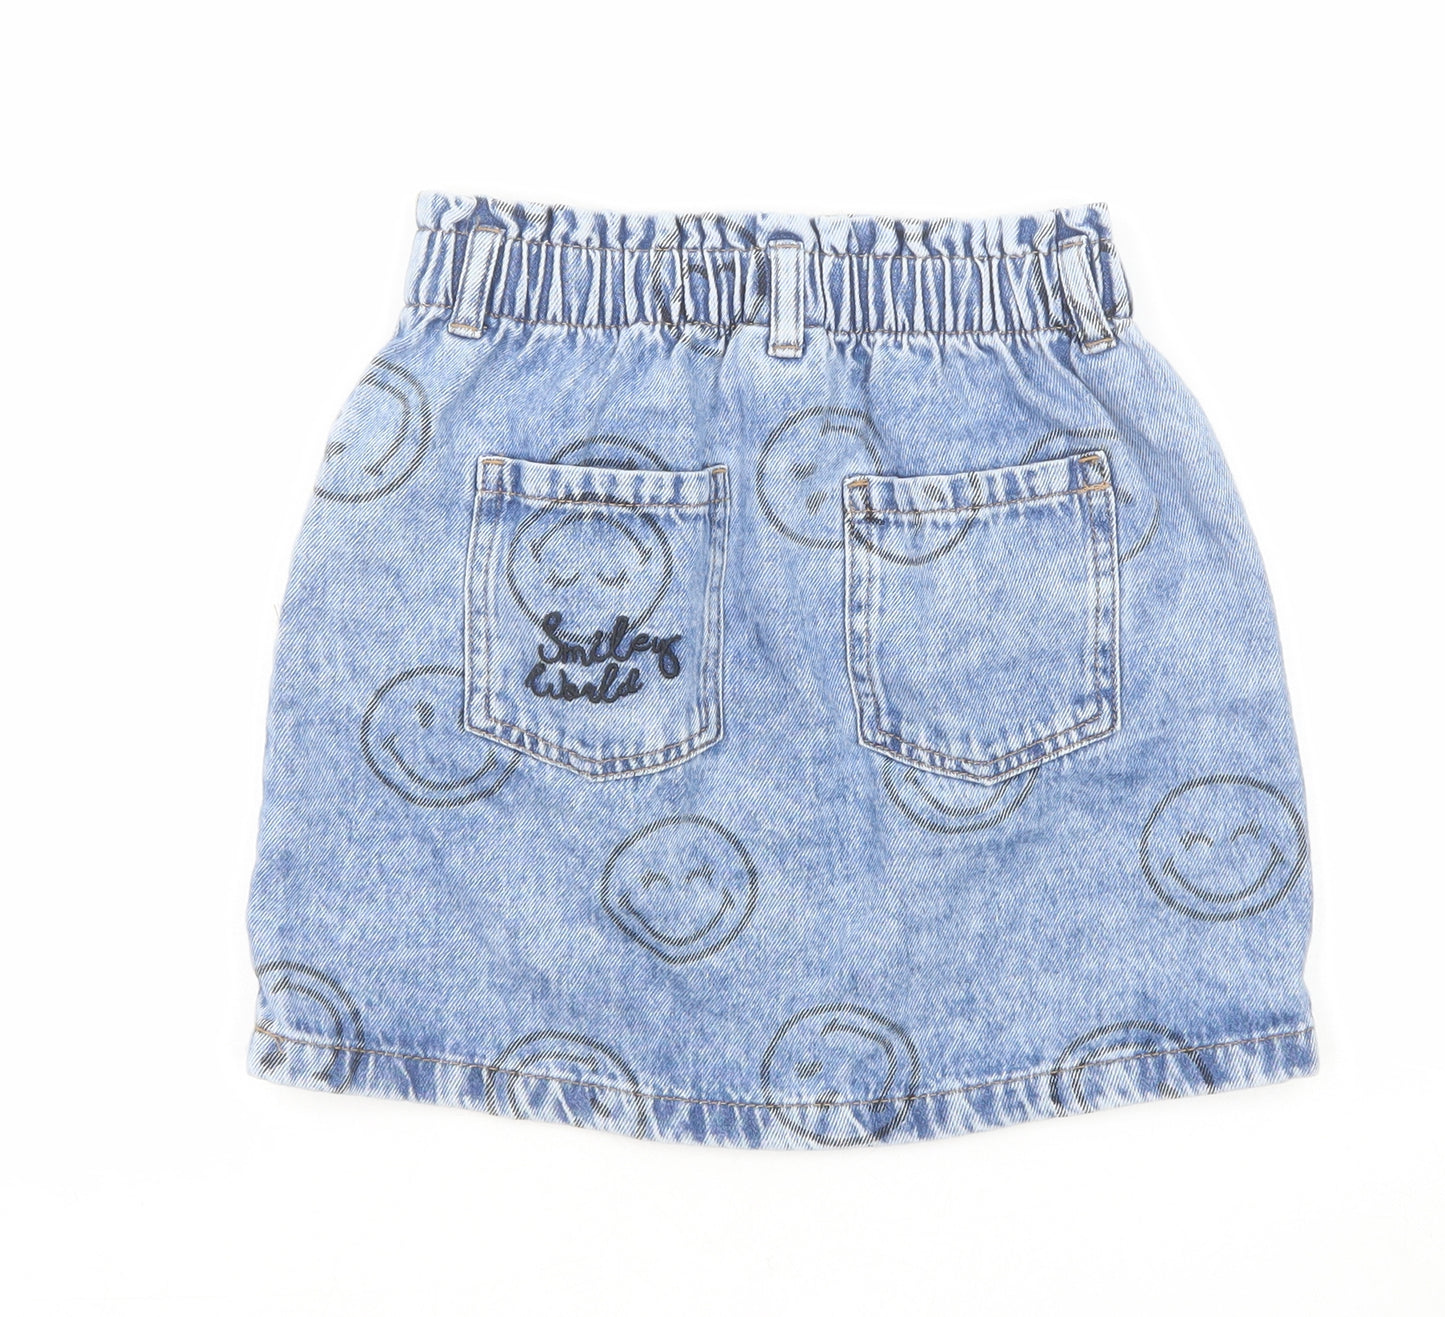 Smiley World Girls Blue Geometric Cotton Mini Skirt Size 9 Years Regular Zip - Smiley Face Print